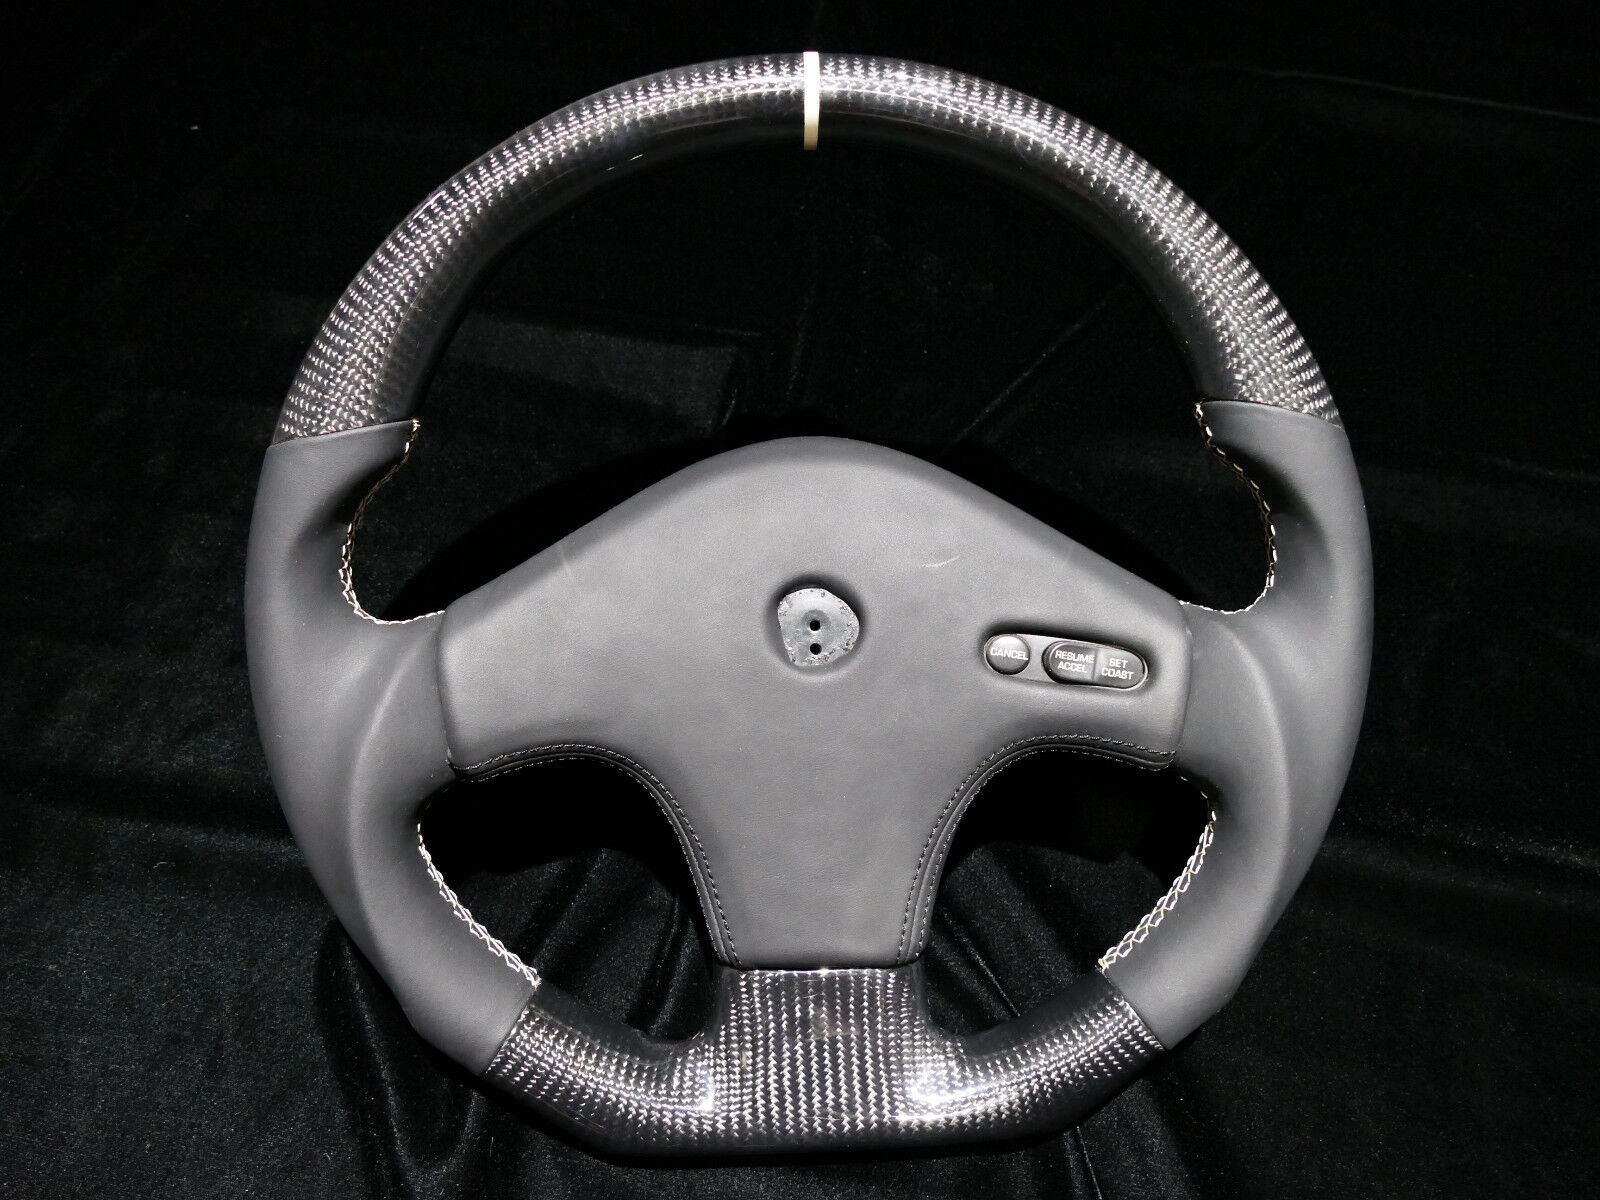 Oem Steering Wheel FOR Nissan 300zx 1990-1996  carbon fibre gtr/skyline/370z/g37